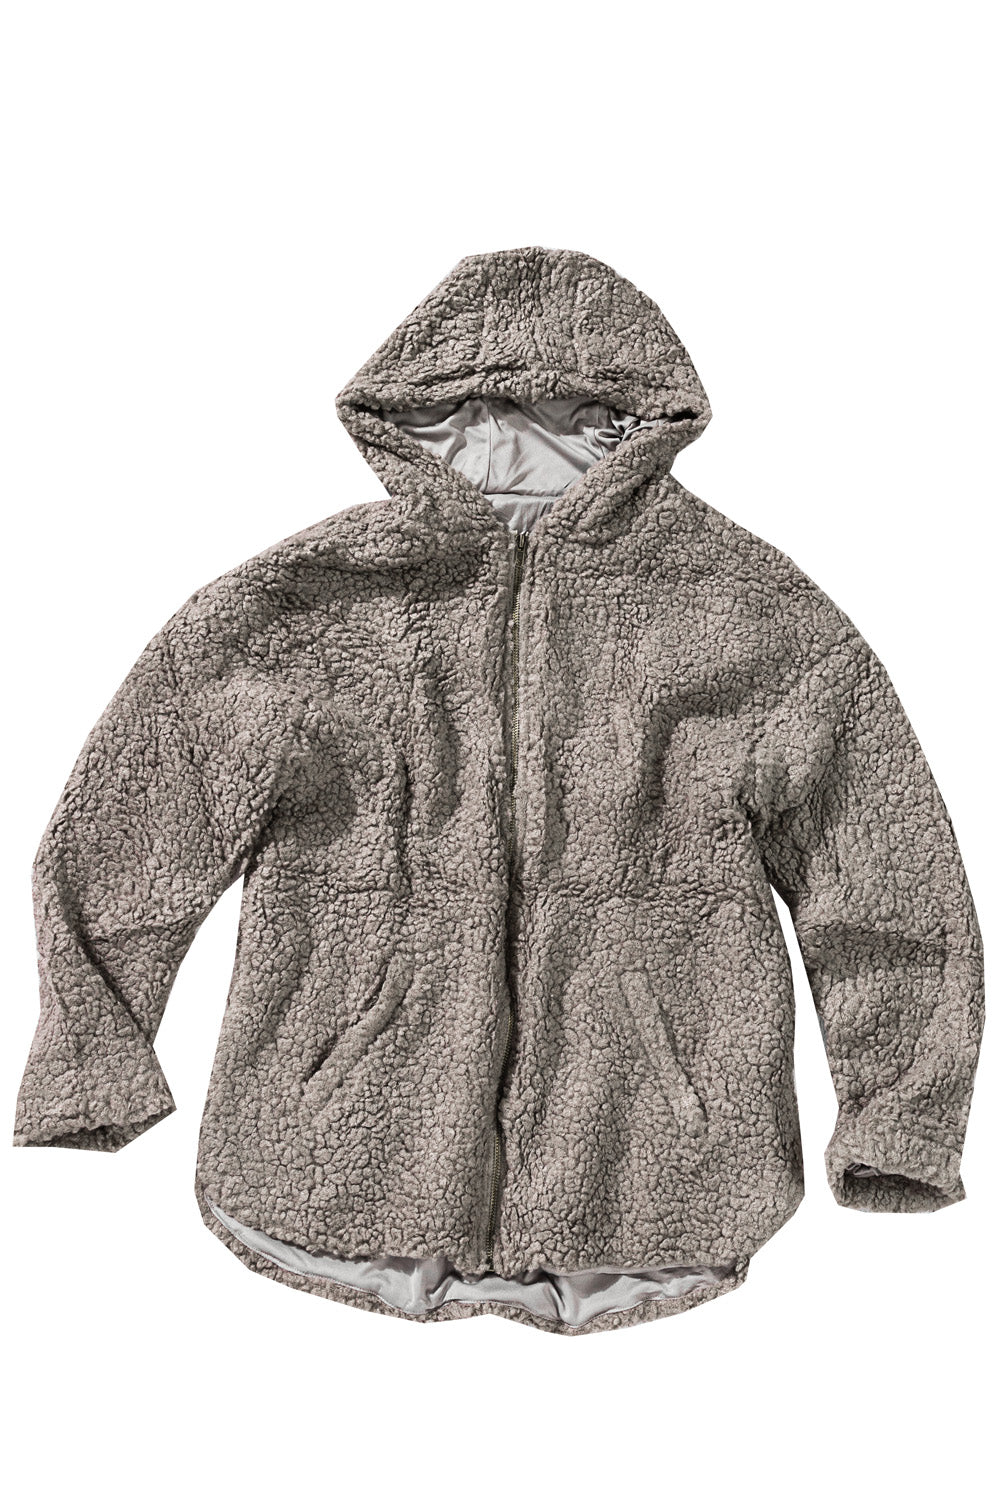 Khaki Womens Full Zip Soft Warm Sherpa Hooded Coat with Pocket LC8511355-16